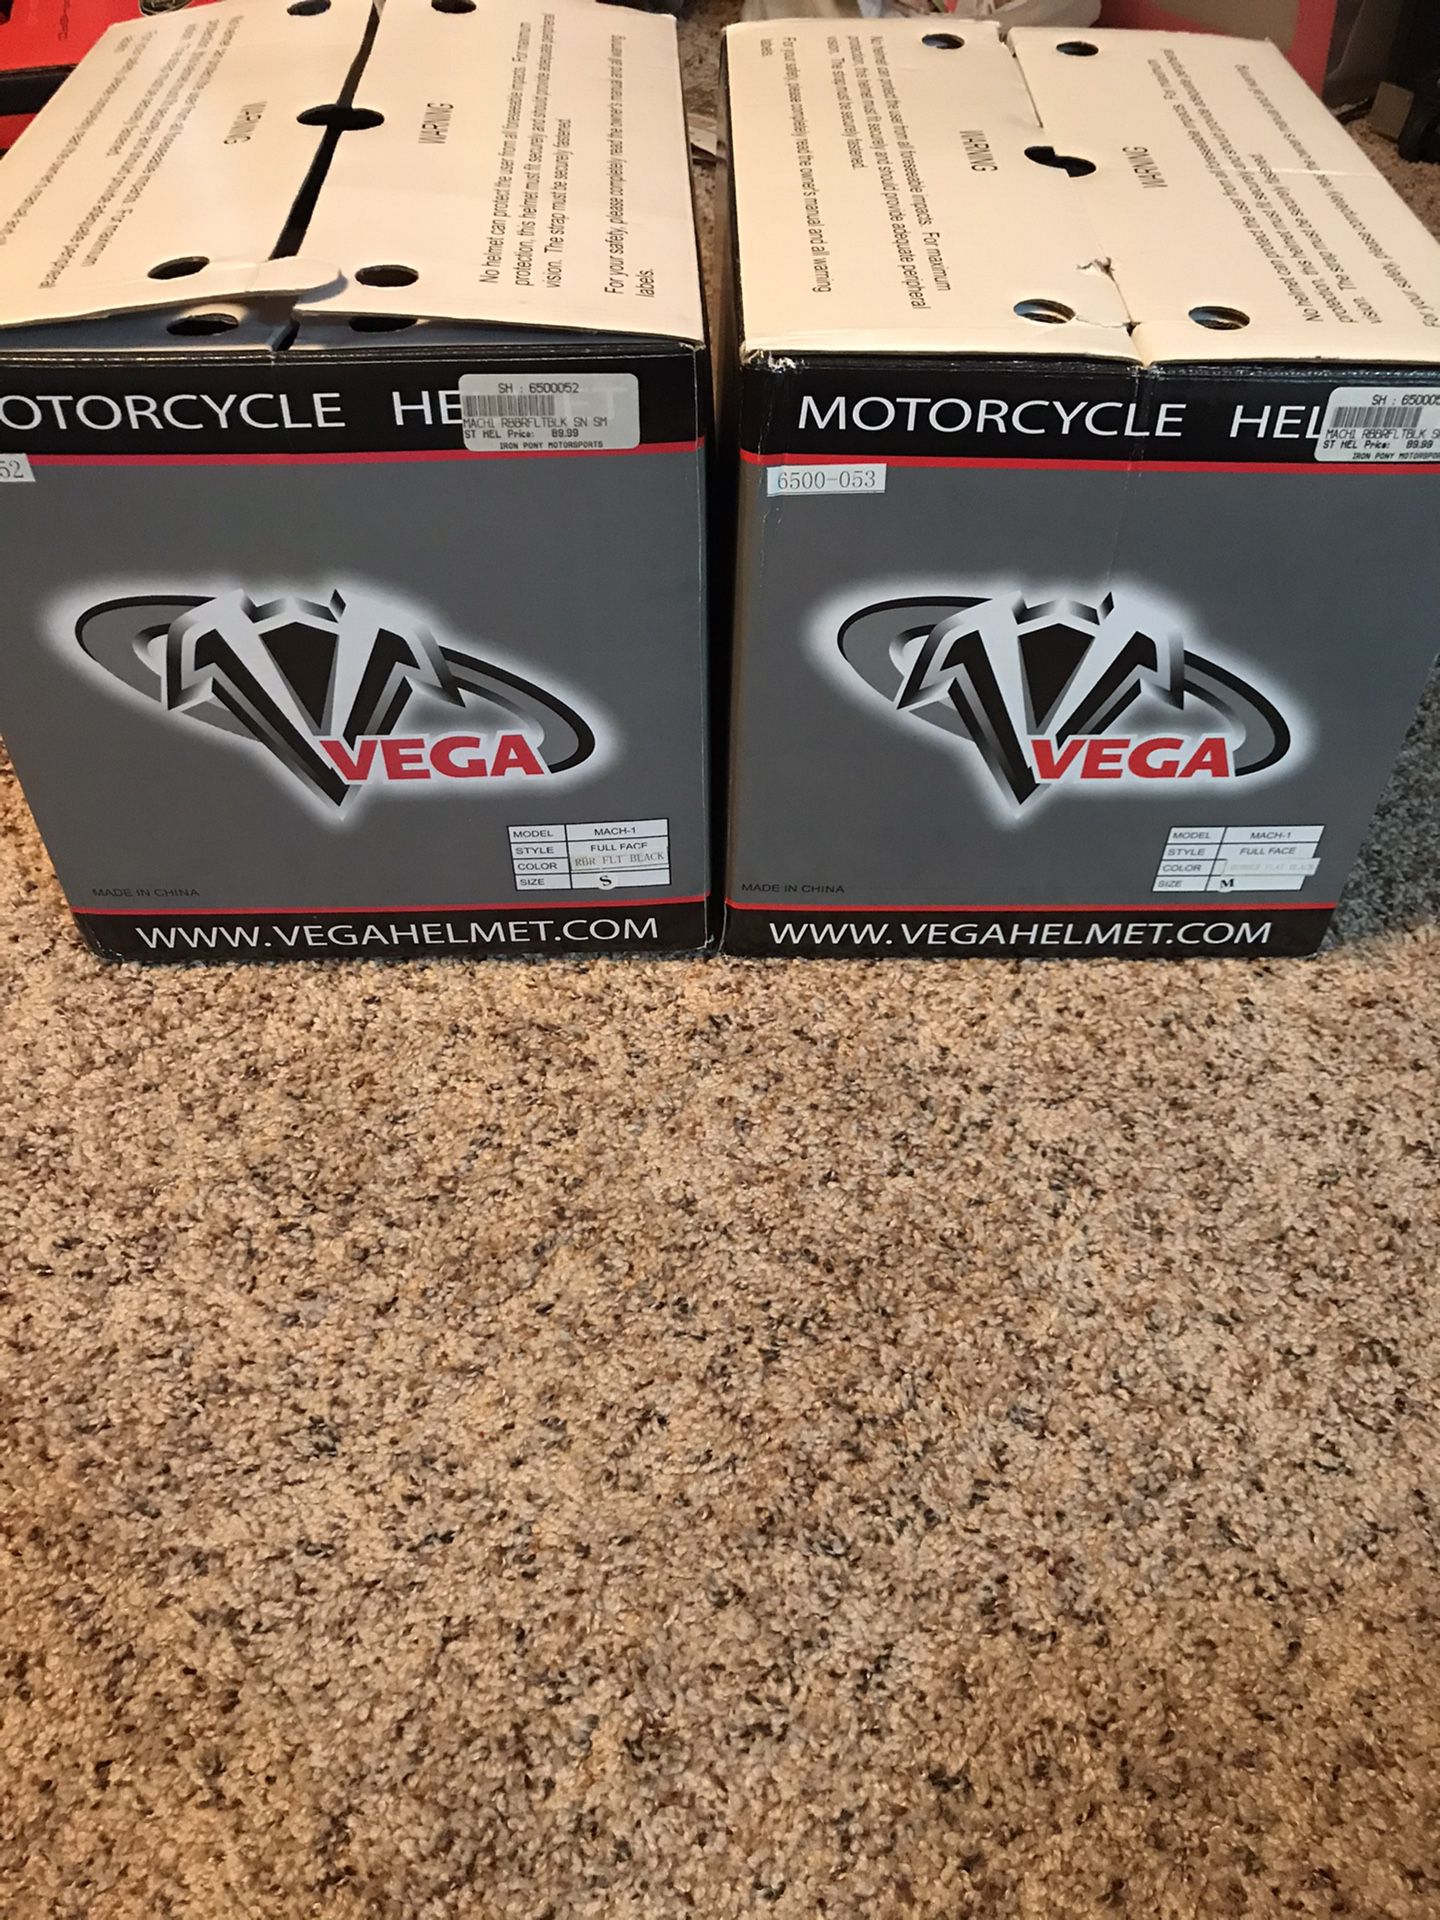 Vega motorcycle helmets small and medium